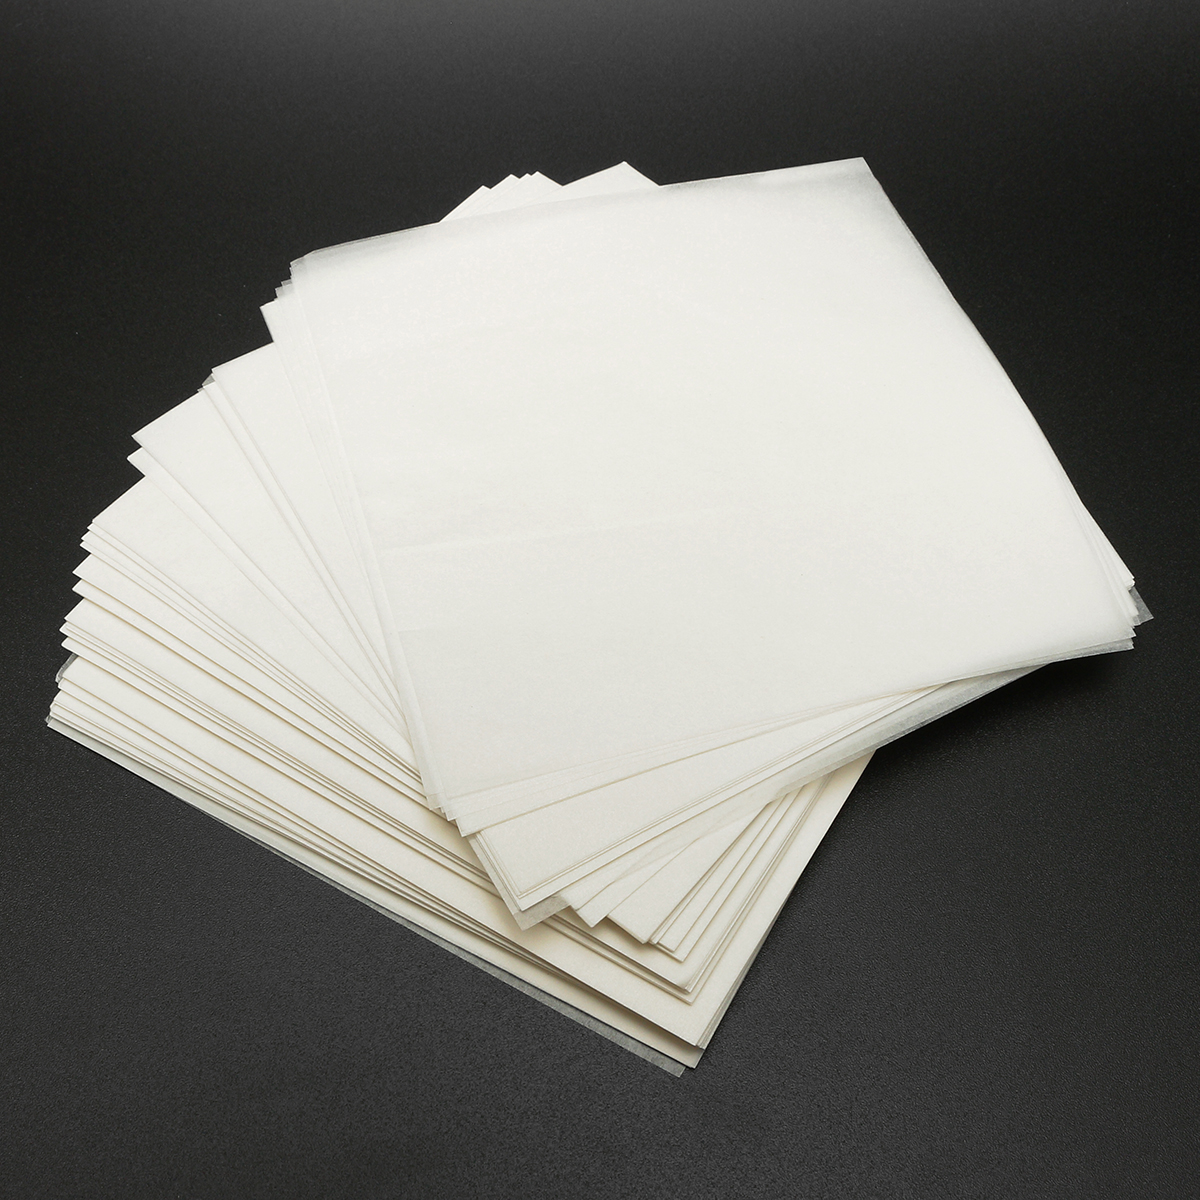 Sheet of paper. Лист бумаги. Листовая бумага. Белая бумага. Пачка листов бумаги.